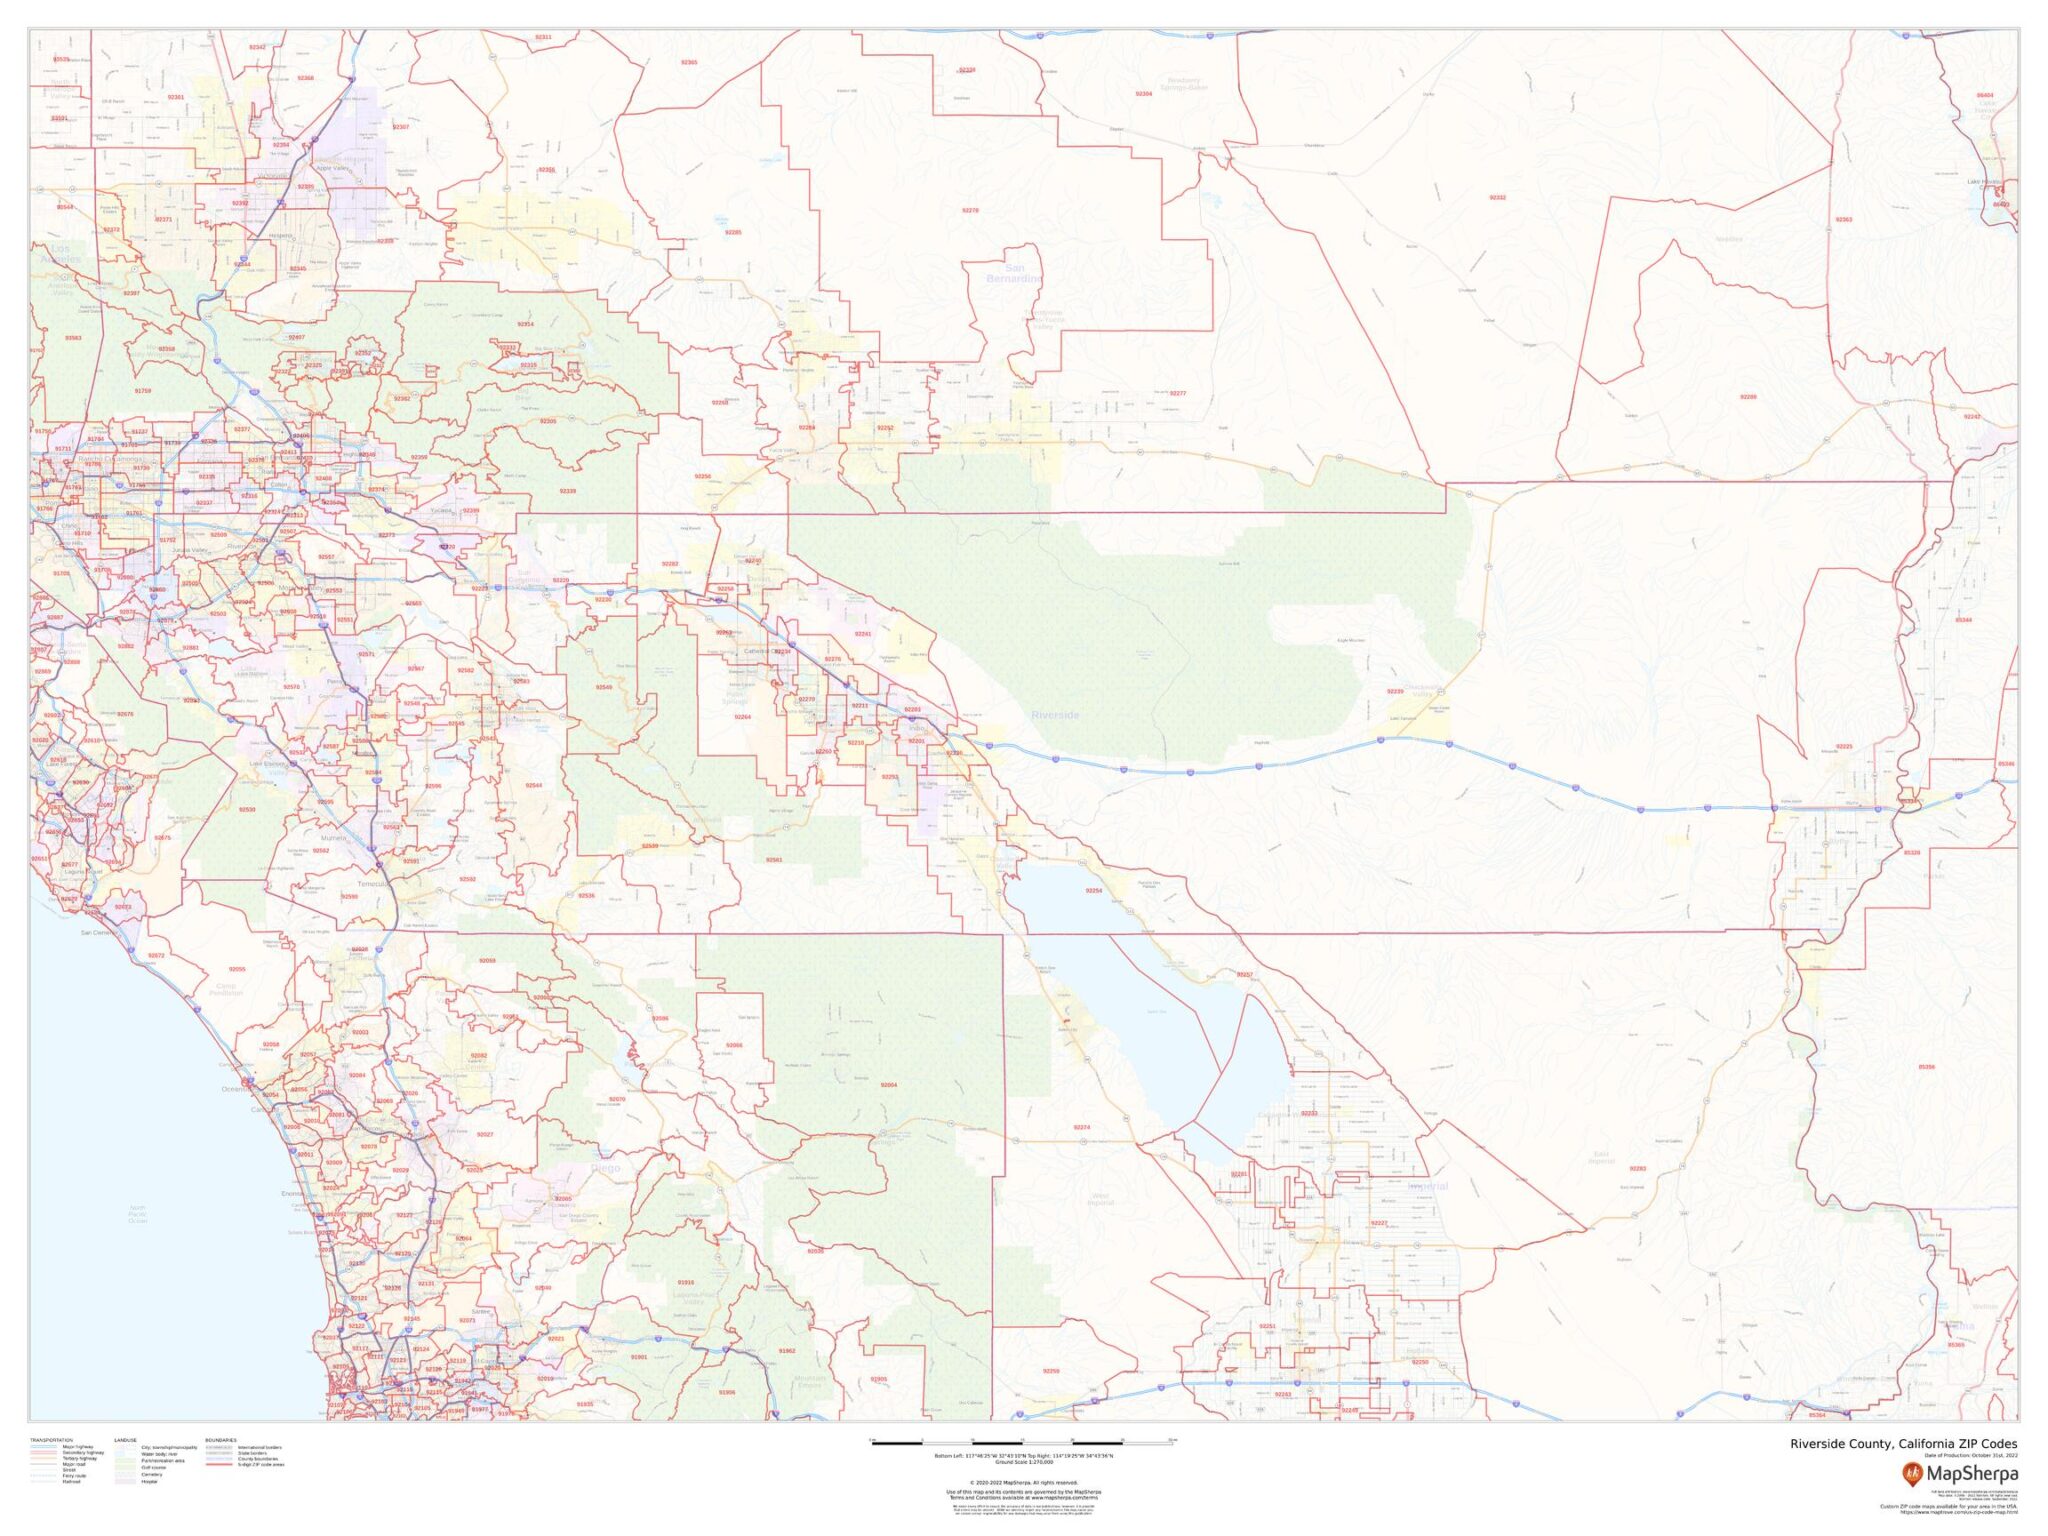 Riverside County, California ZIP Codes by MapSherpa - The Map Shop